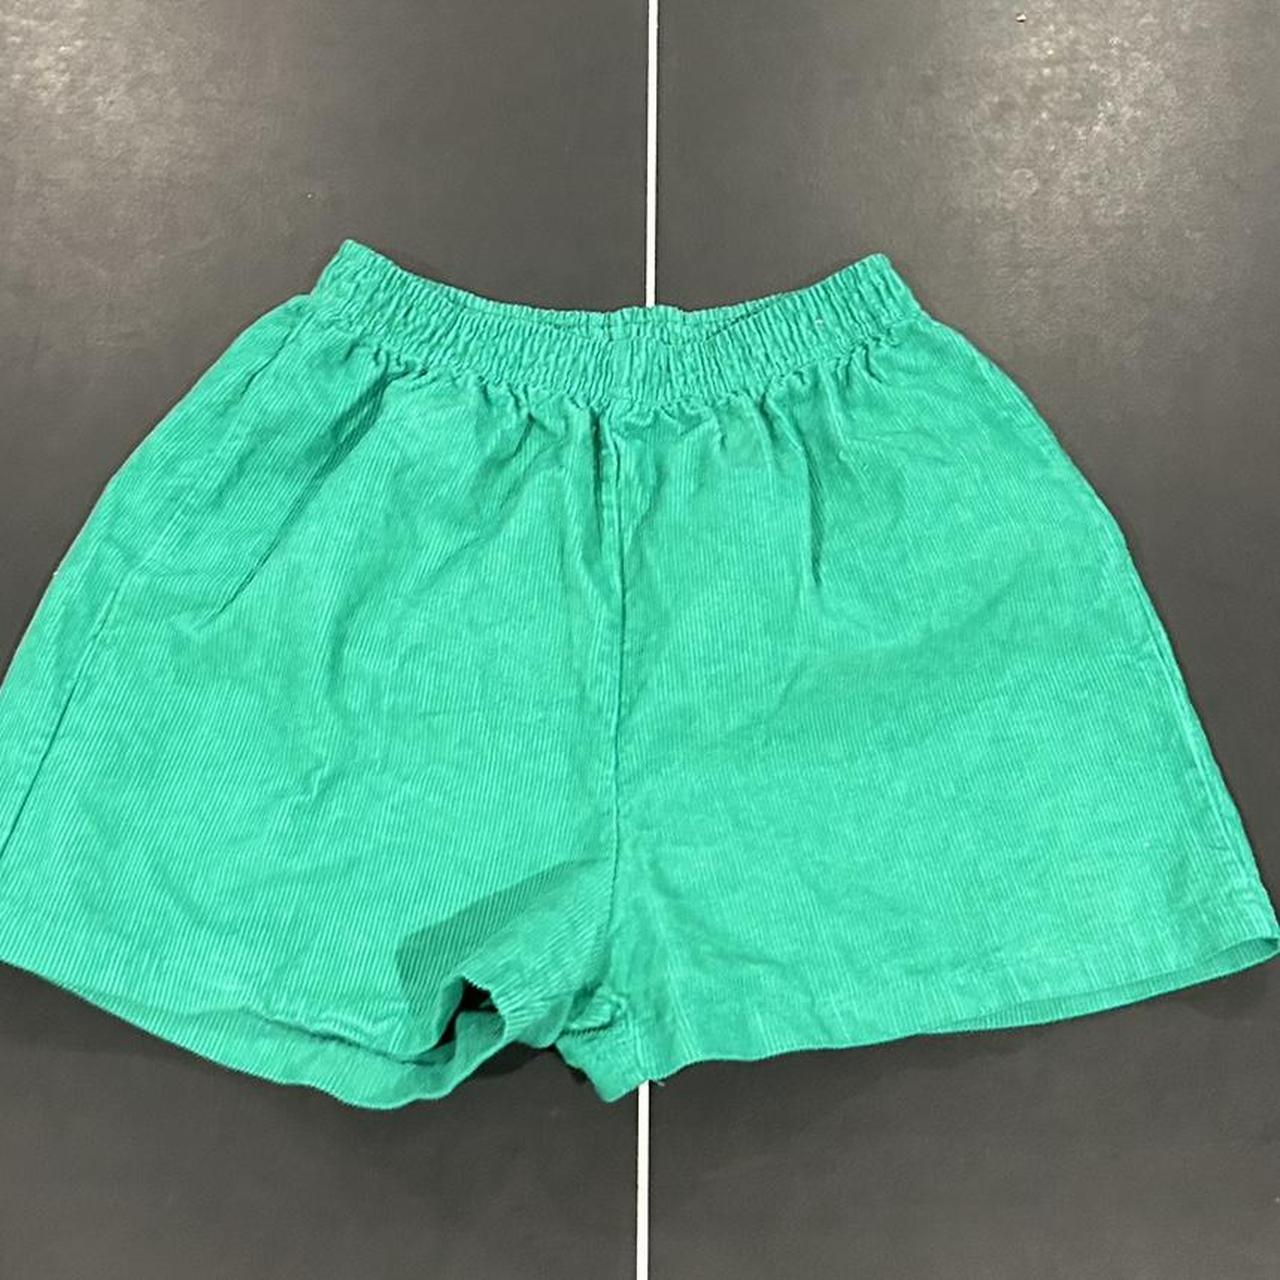 Urban Outfitters Women's Shorts | Depop